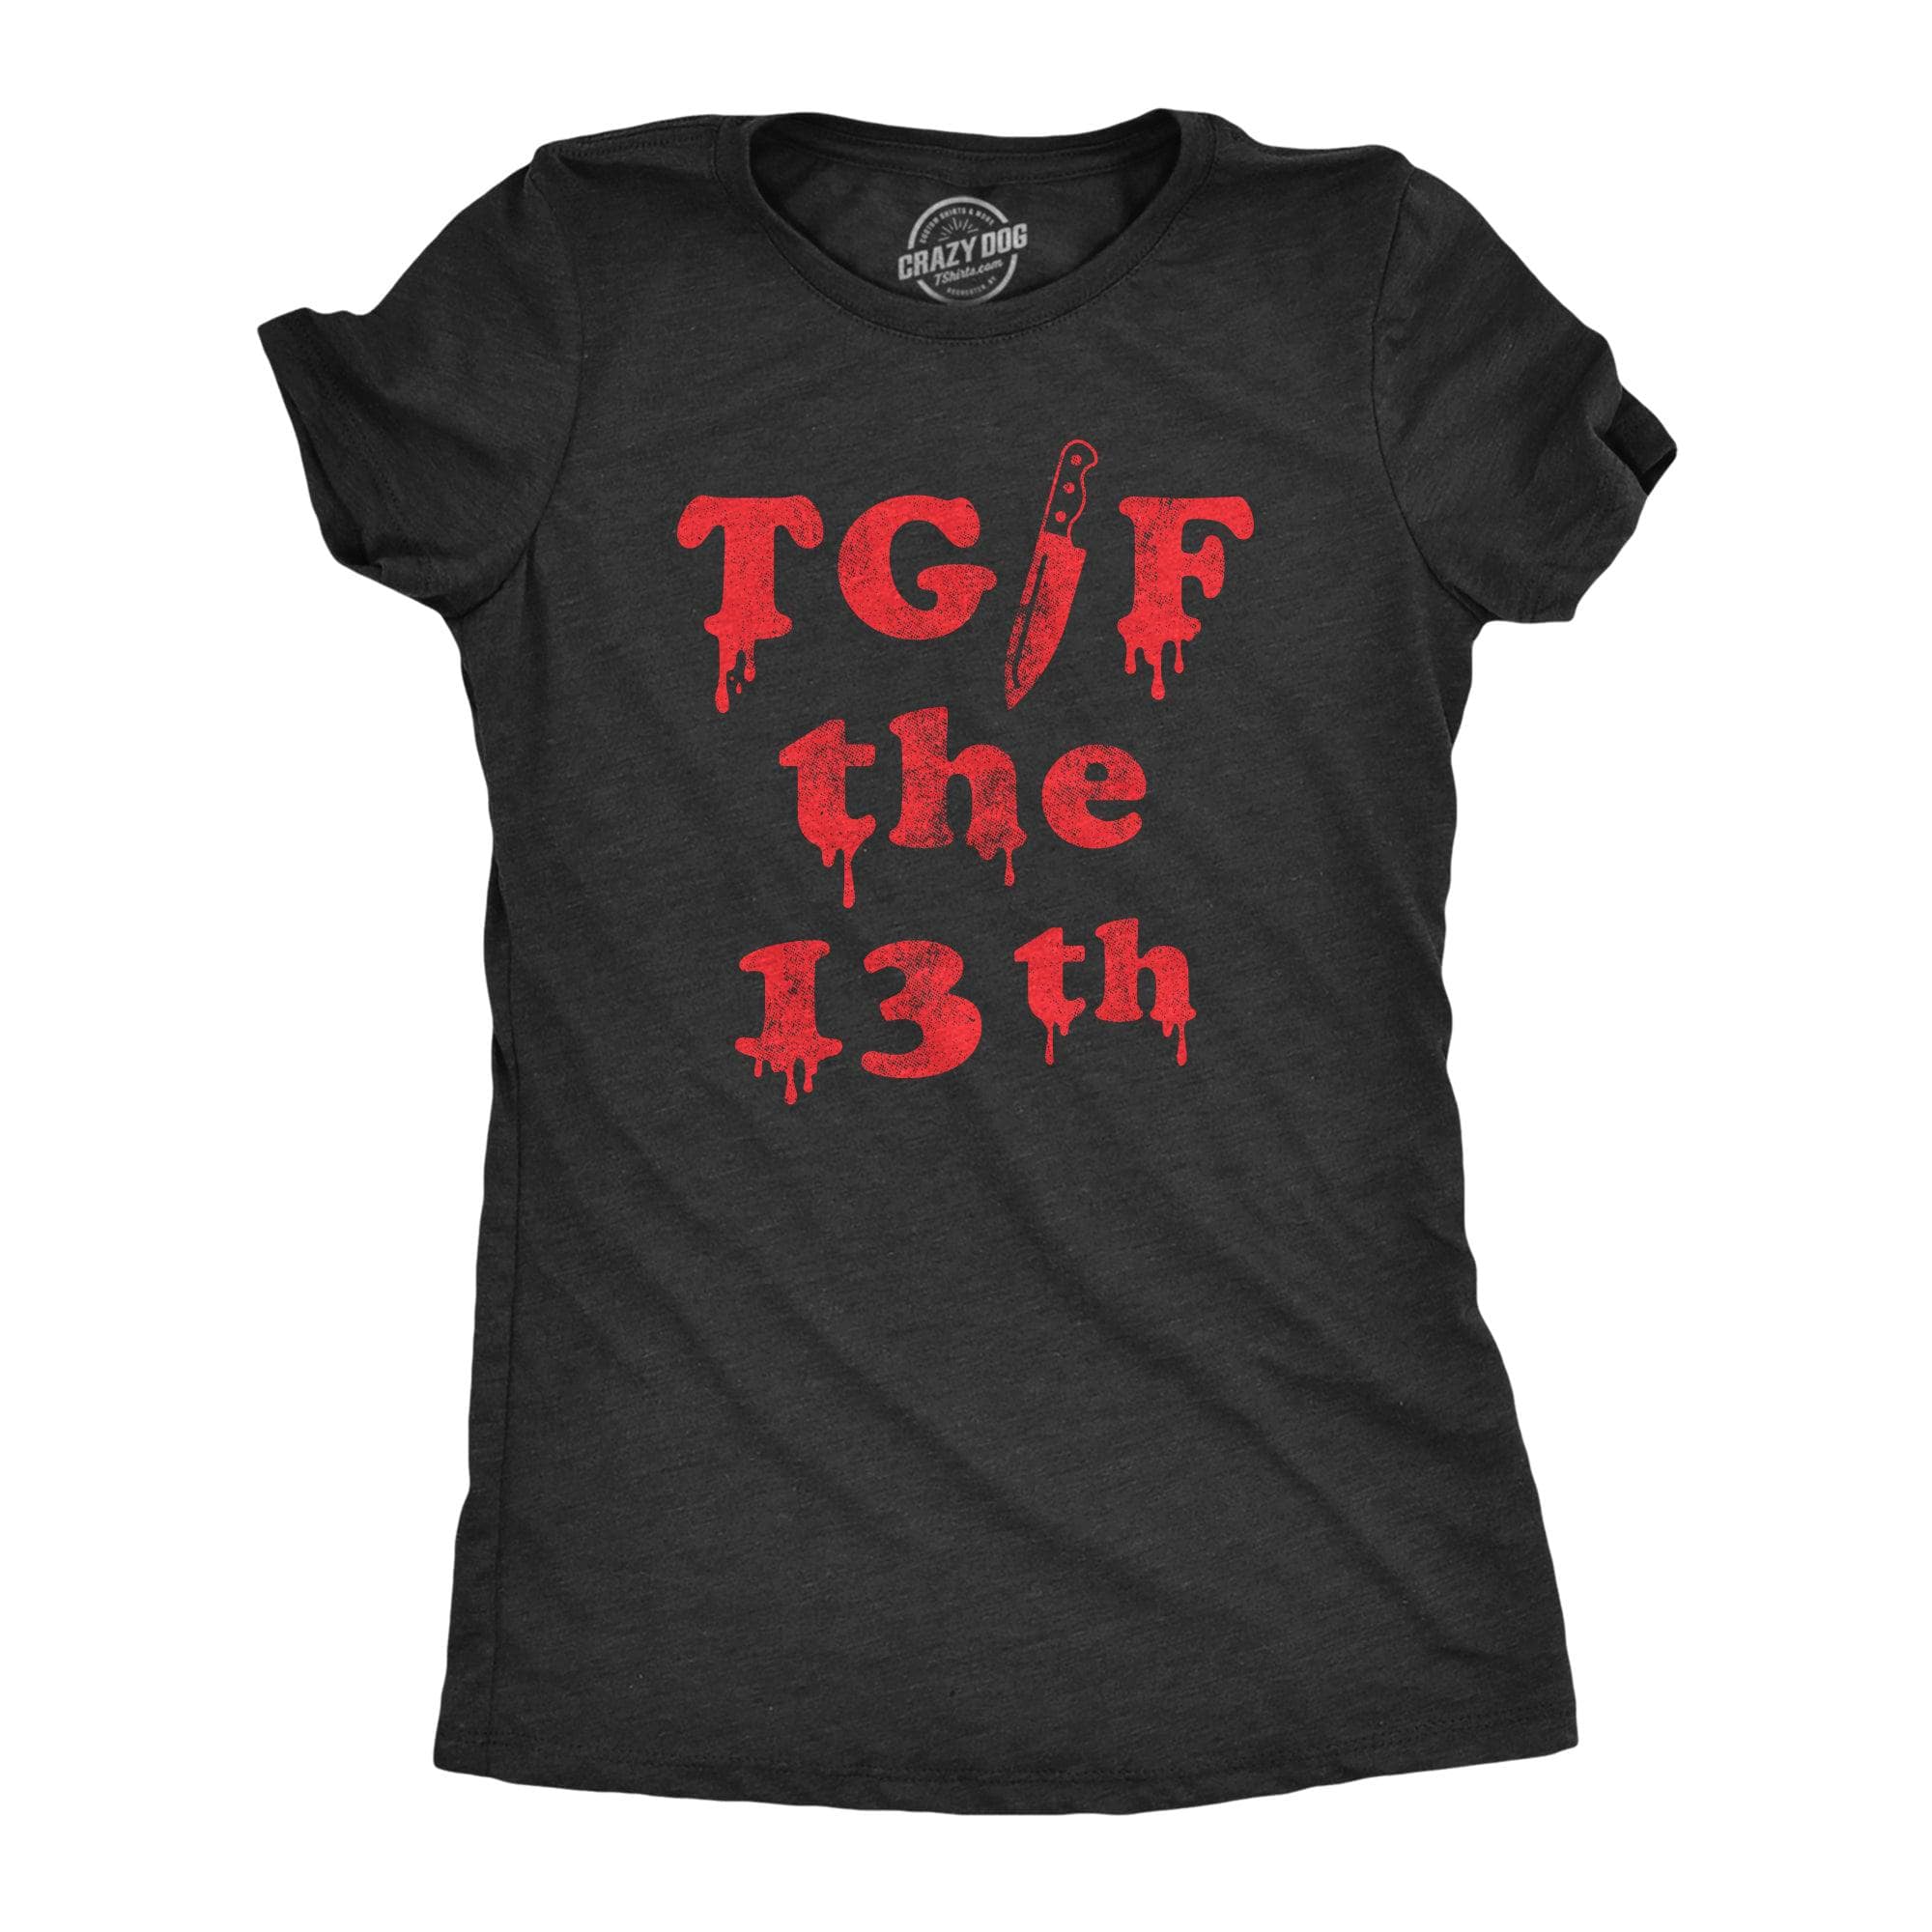 TGIF the 13th Women's Tshirt  -  Crazy Dog T-Shirts